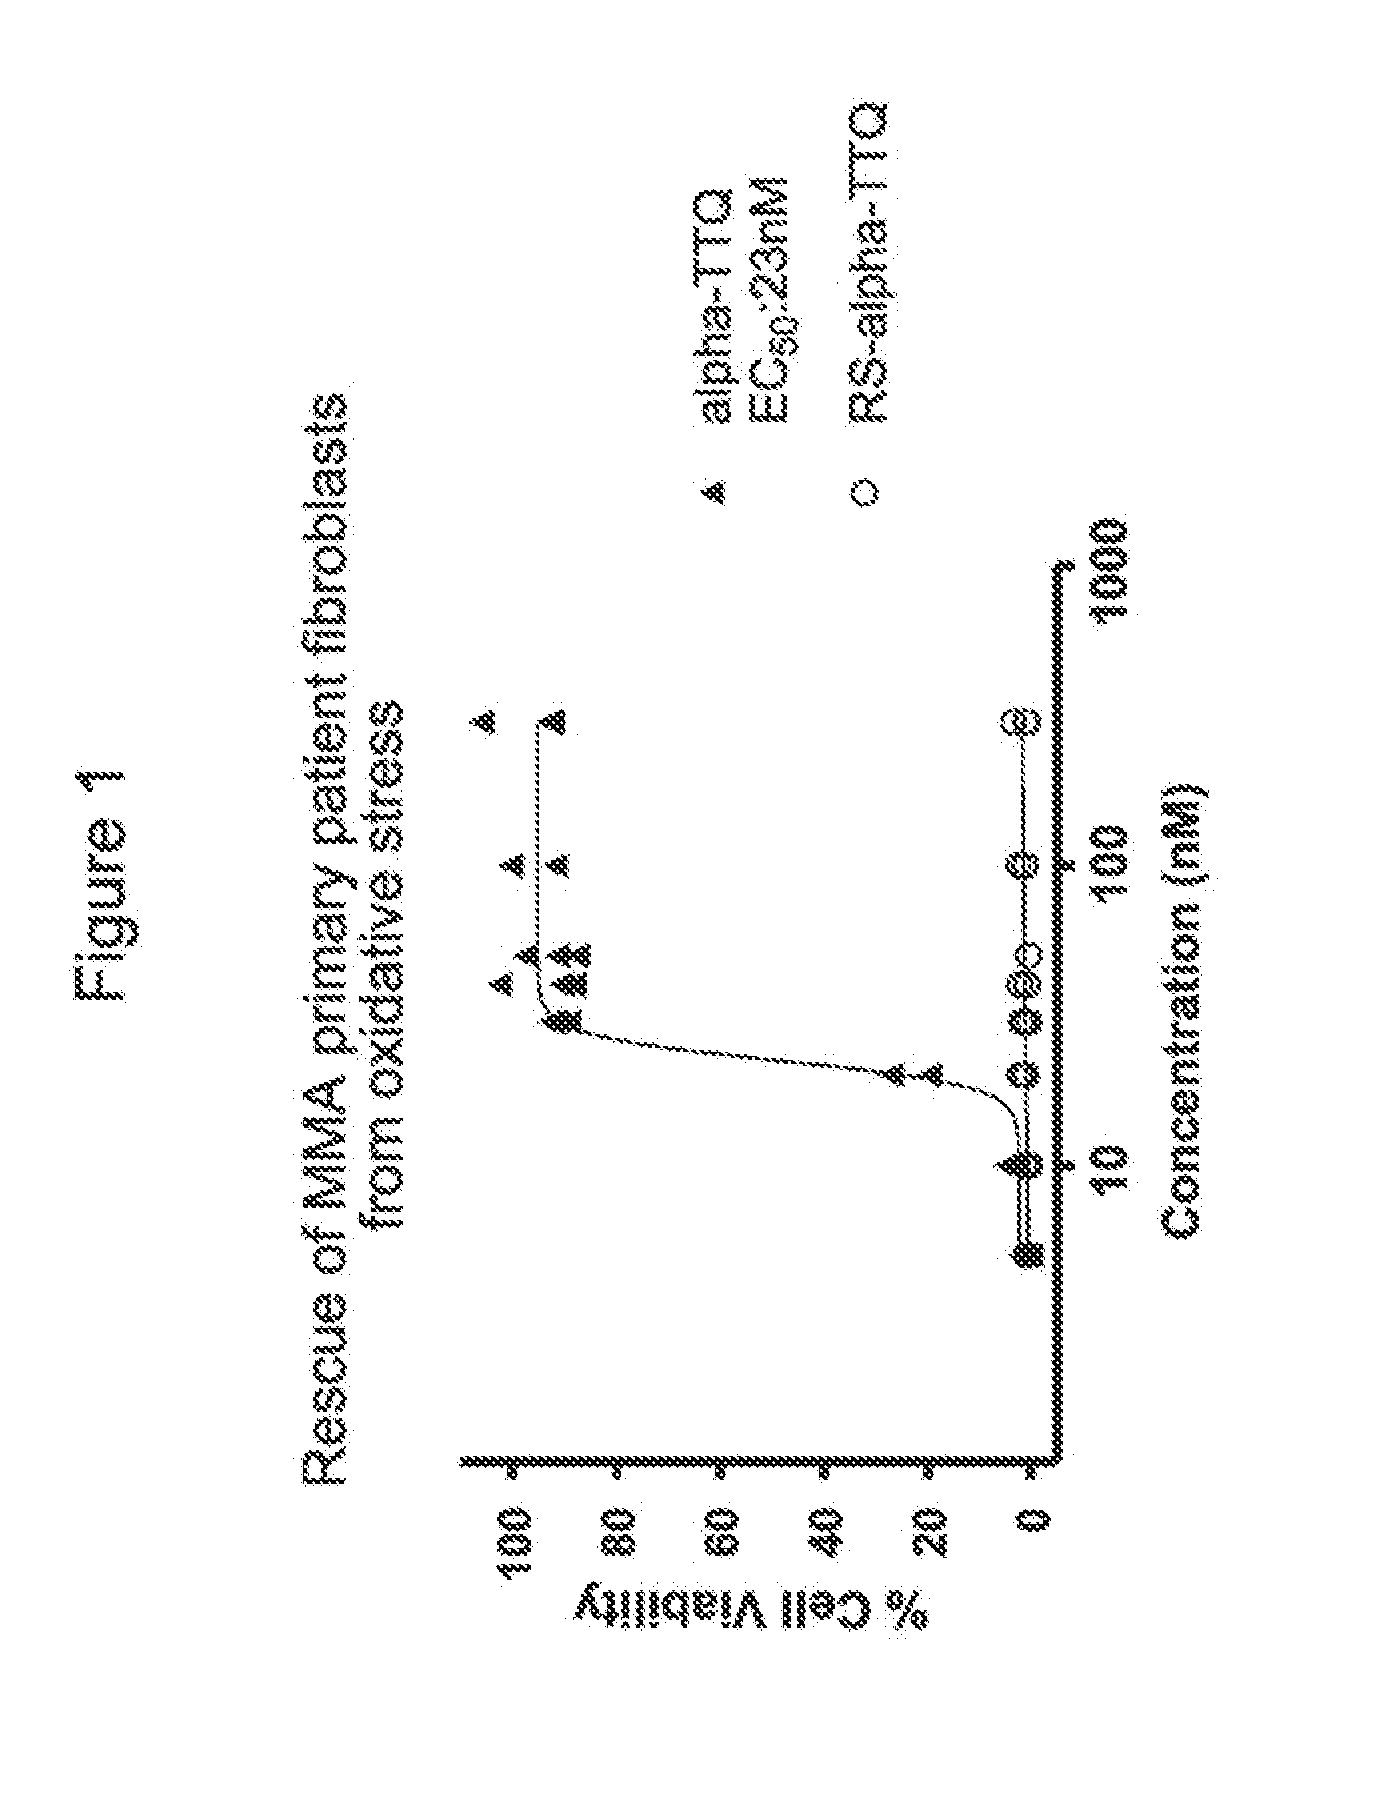 Treatment of methylmalonic aciduria, isovaleric aciduria, and other organic acidurias with tocotrienol quinones